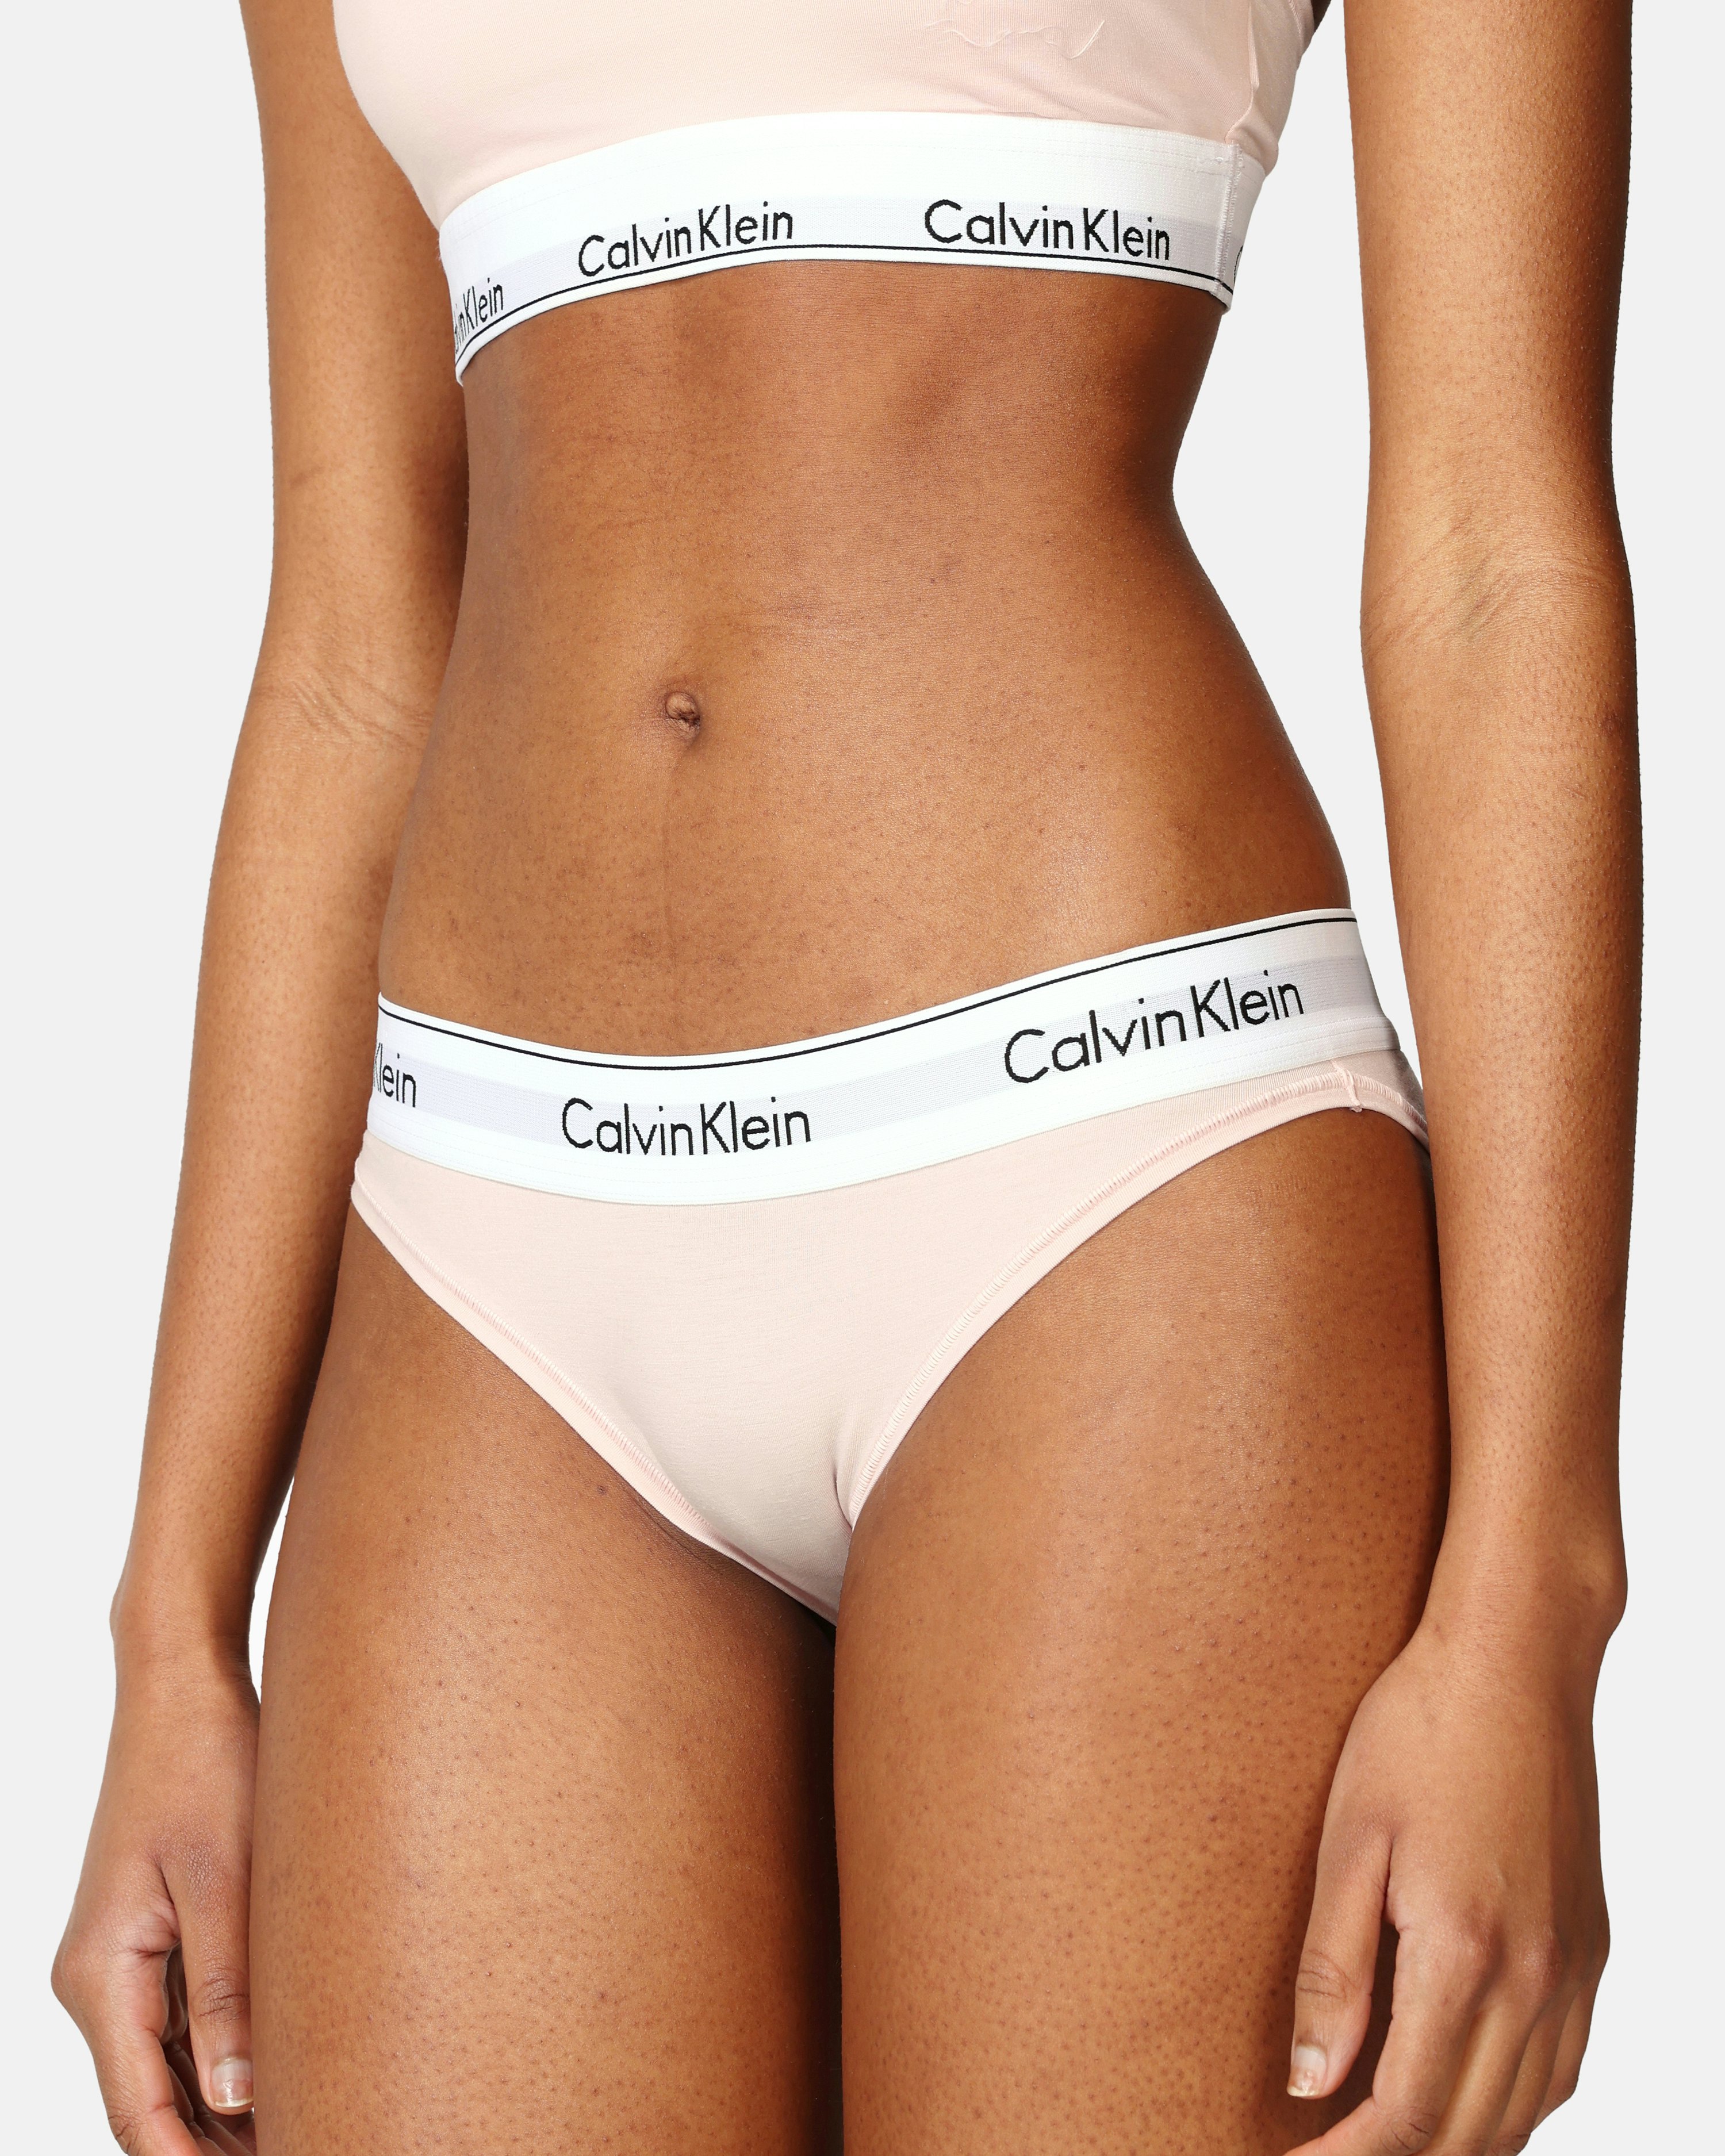 Calvin Klein Undies 3pcs (small), Women's Fashion, Undergarments